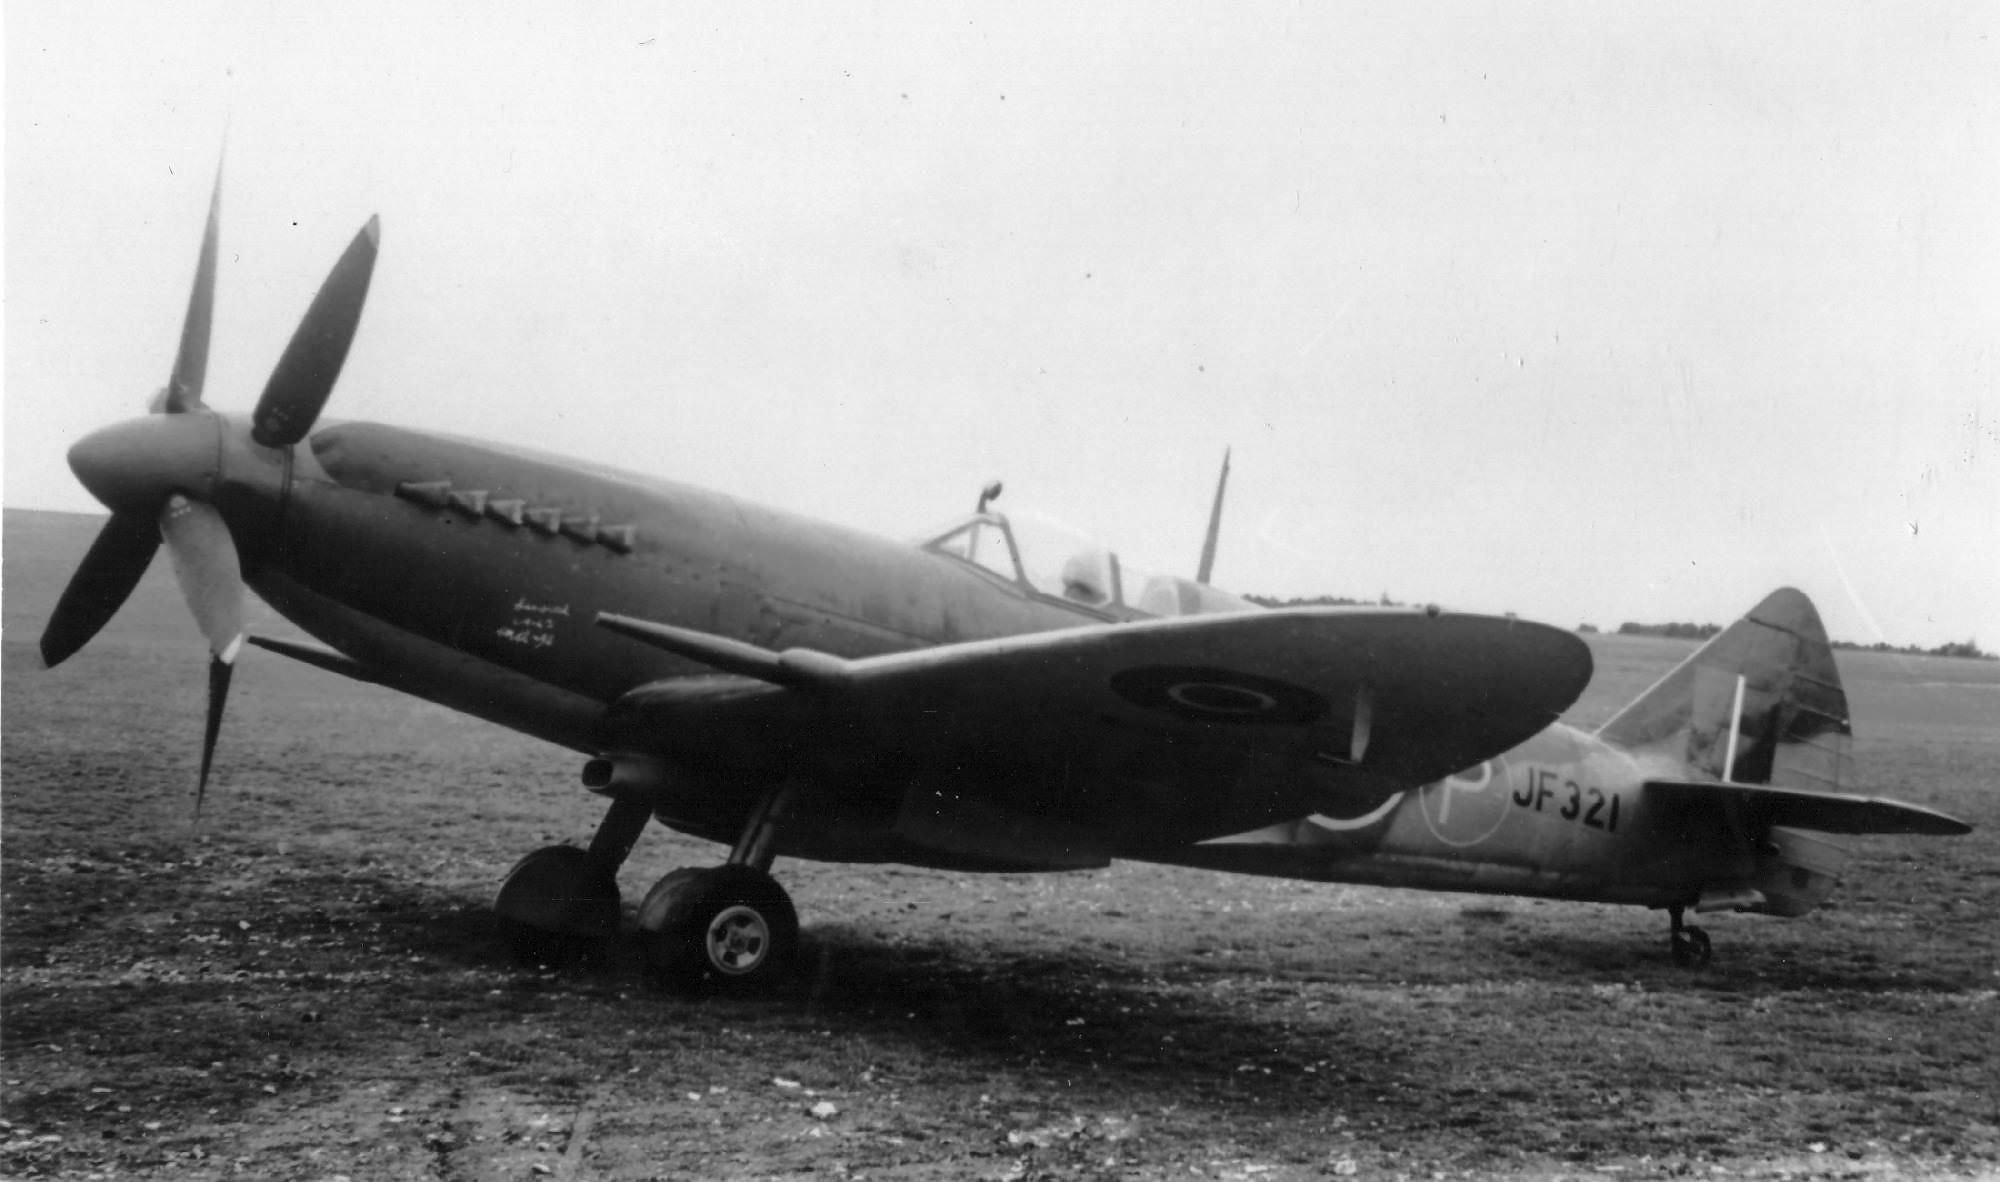 Supermarine Spitfire Mk XIV prototype JF321